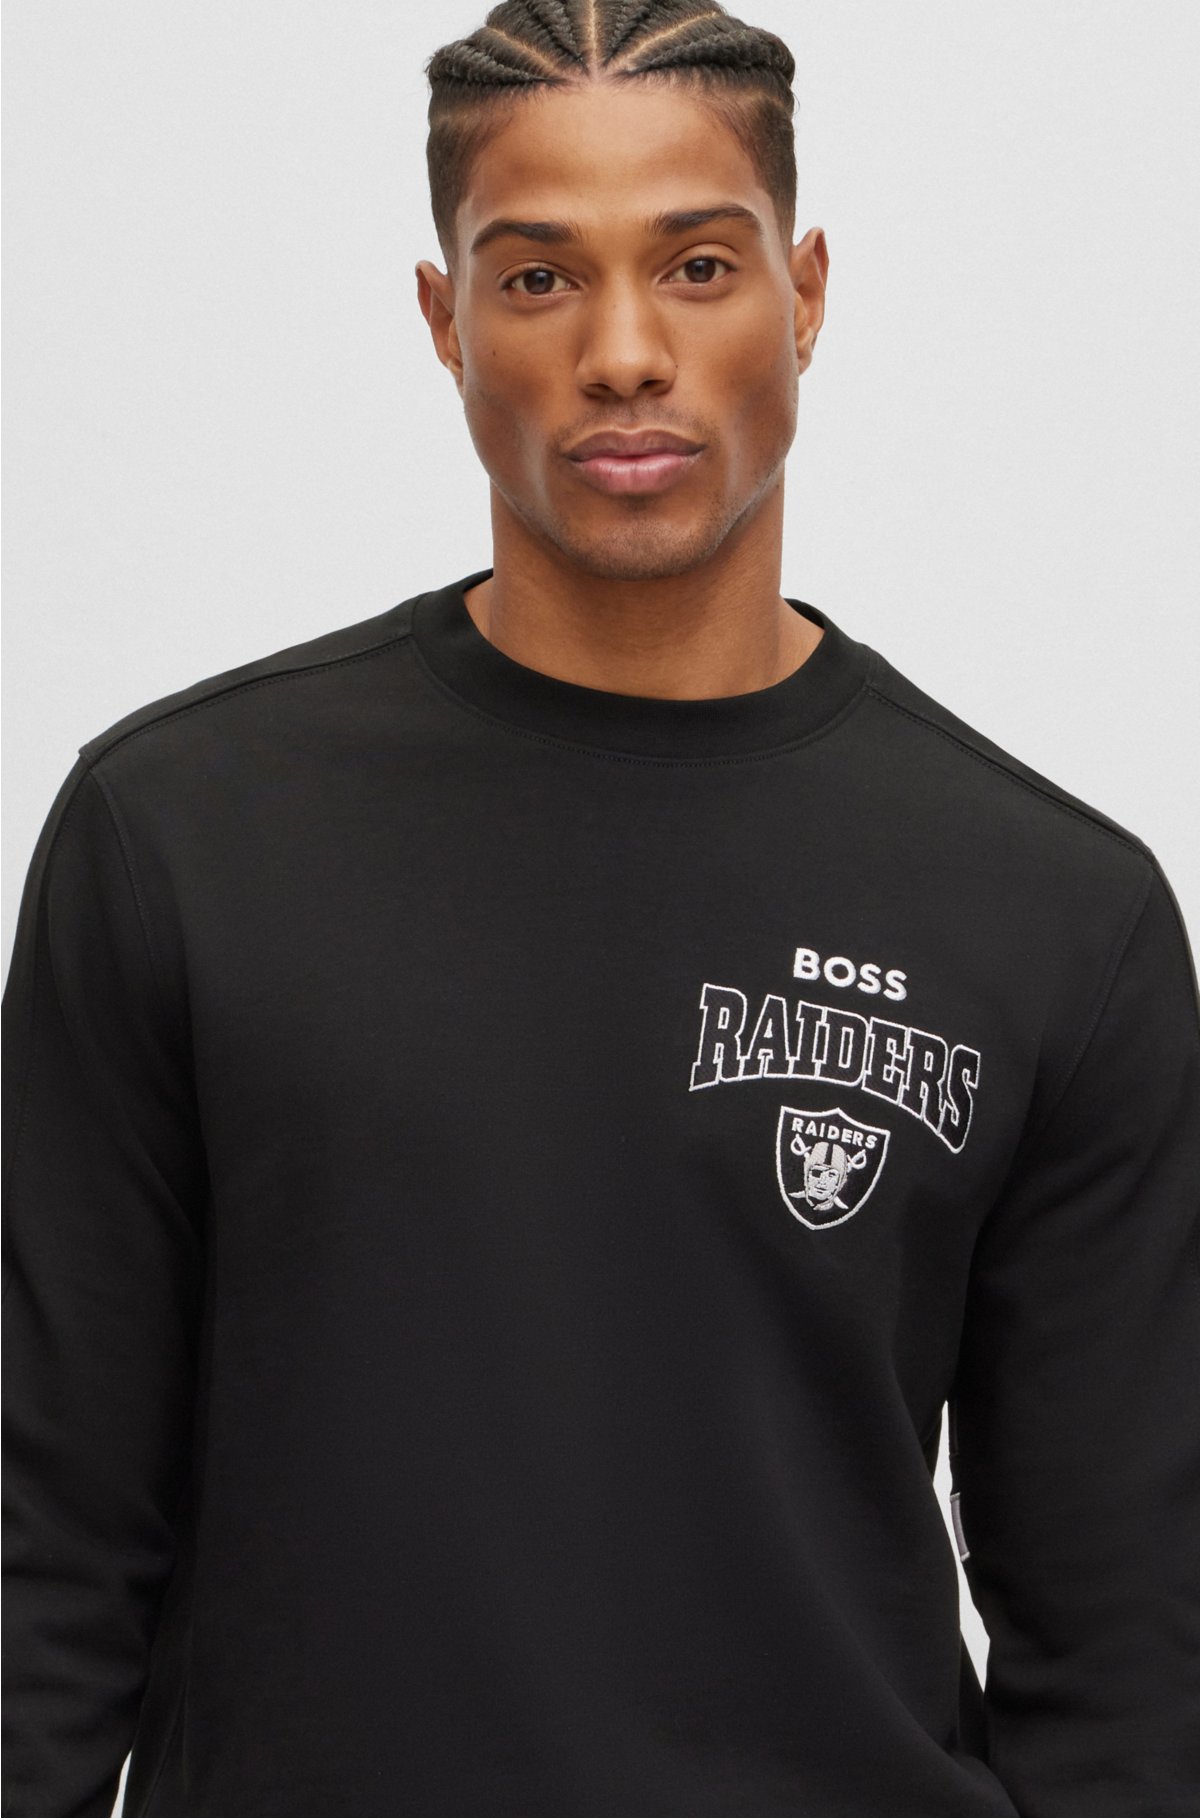 BOSS x NFL cotton-terry sweatshirt with collaborative branding, Raiders